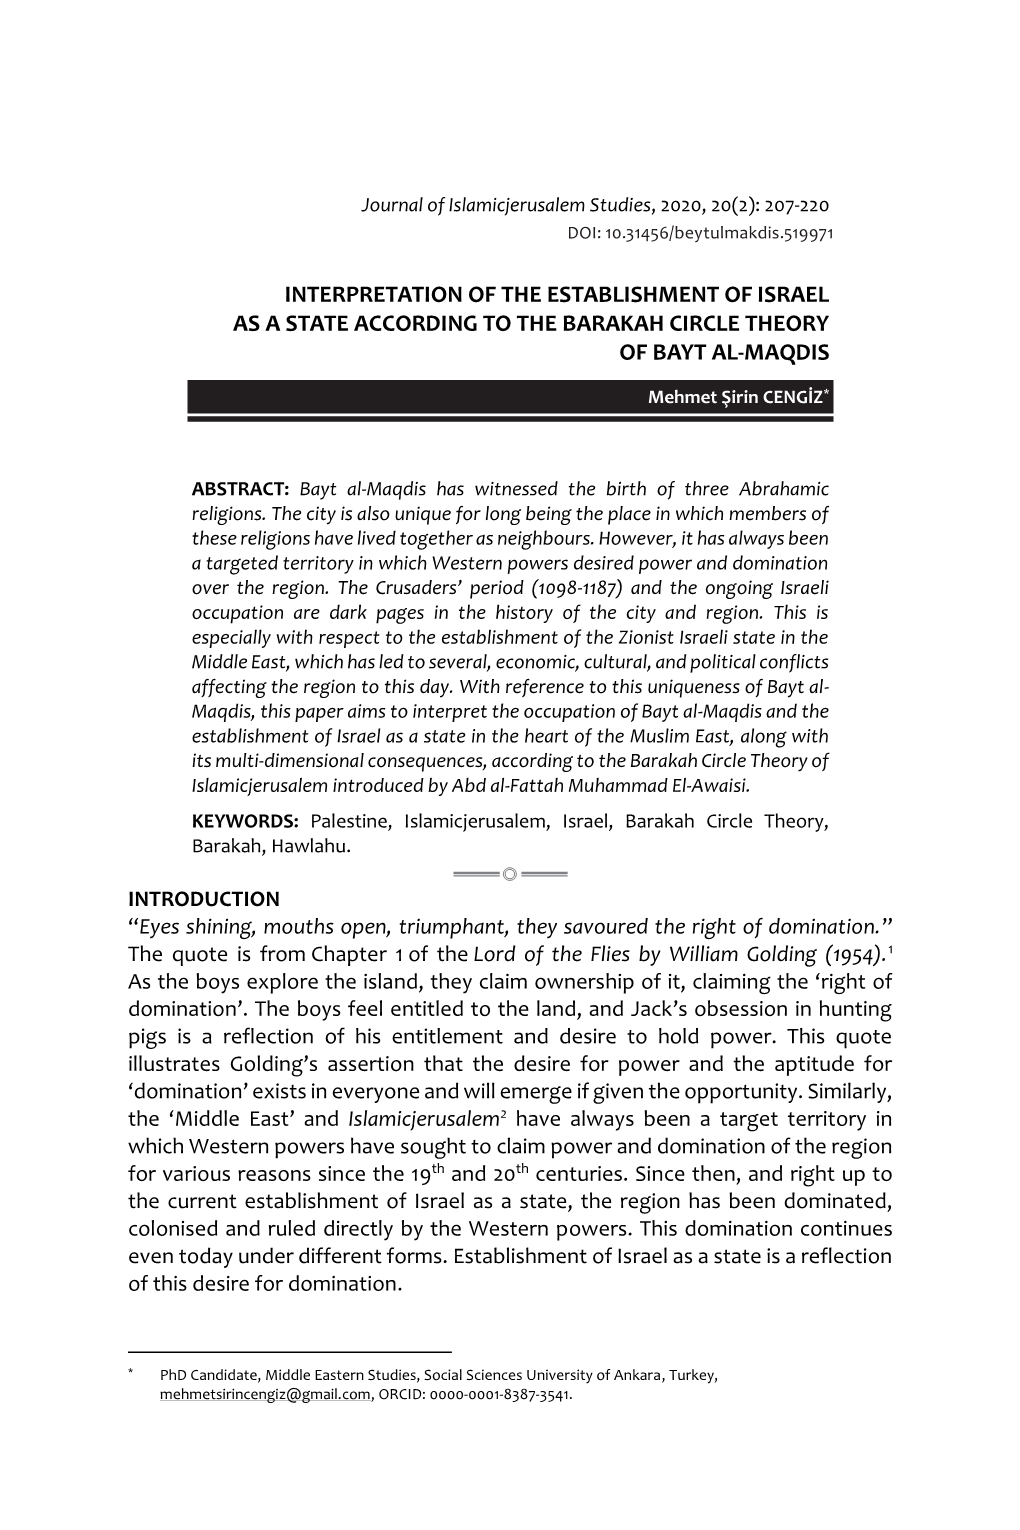 Interpretation of the Establishment of Israel As A